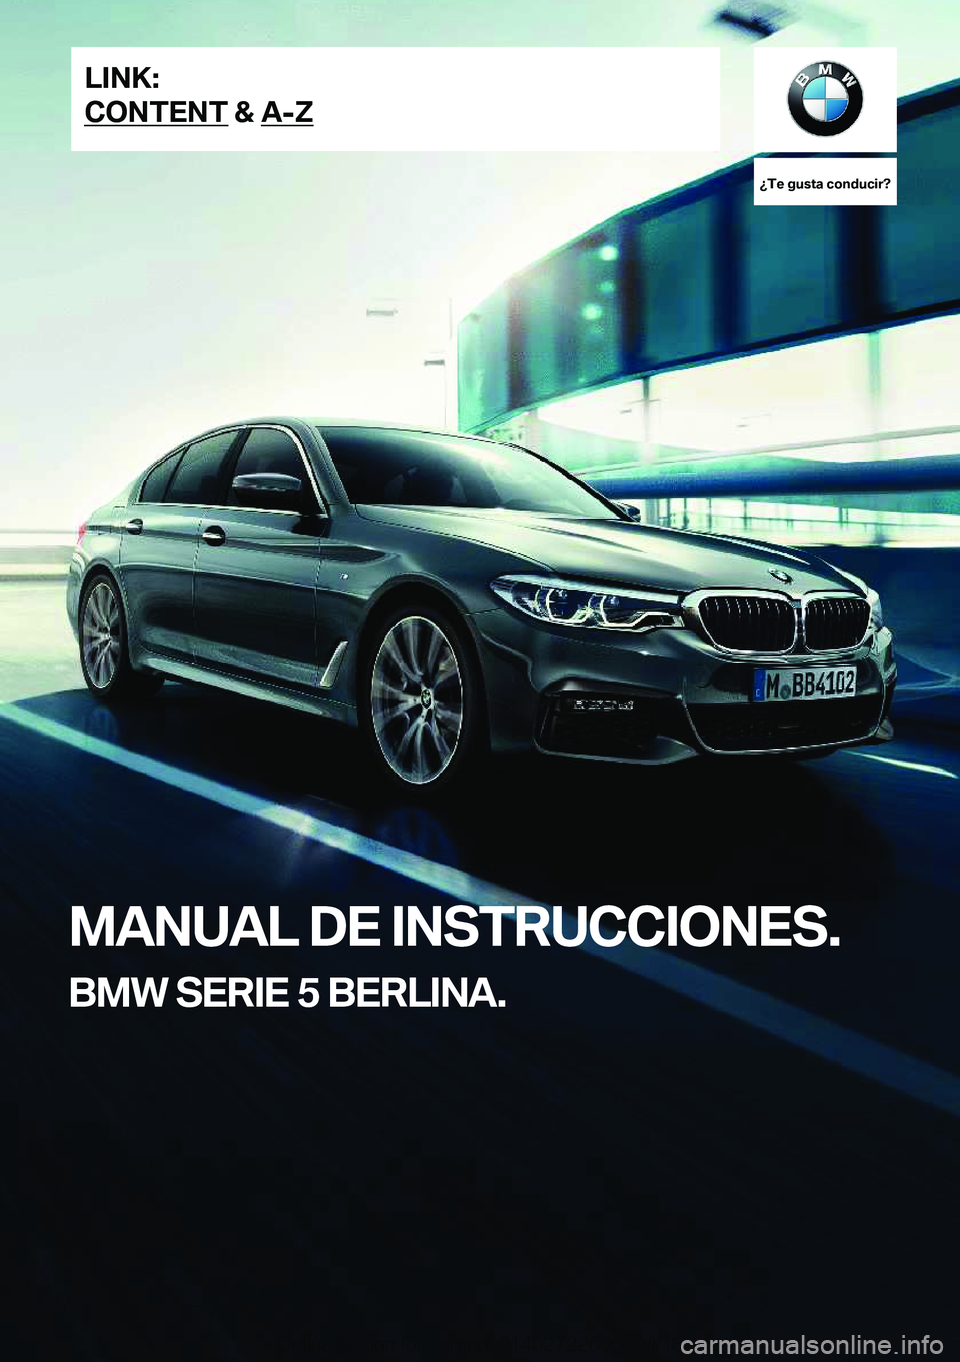 BMW 5 SERIES 2019  Manuales de Empleo (in Spanish) ��T�e��g�u�s�t�a��c�o�n�d�u�c�i�r� 
�M�A�N�U�A�L��D�E��I�N�S�T�R�U�C�C�I�O�N�E�S�.
�B�M�W��S�E�R�I�E��5��B�E�R�L�I�N�A�.�L�I�N�K�:
�C�O�N�T�E�N�T��&��A�-�Z�O�n�l�i�n�e��E�d�i�t�i�o�n��f�o�